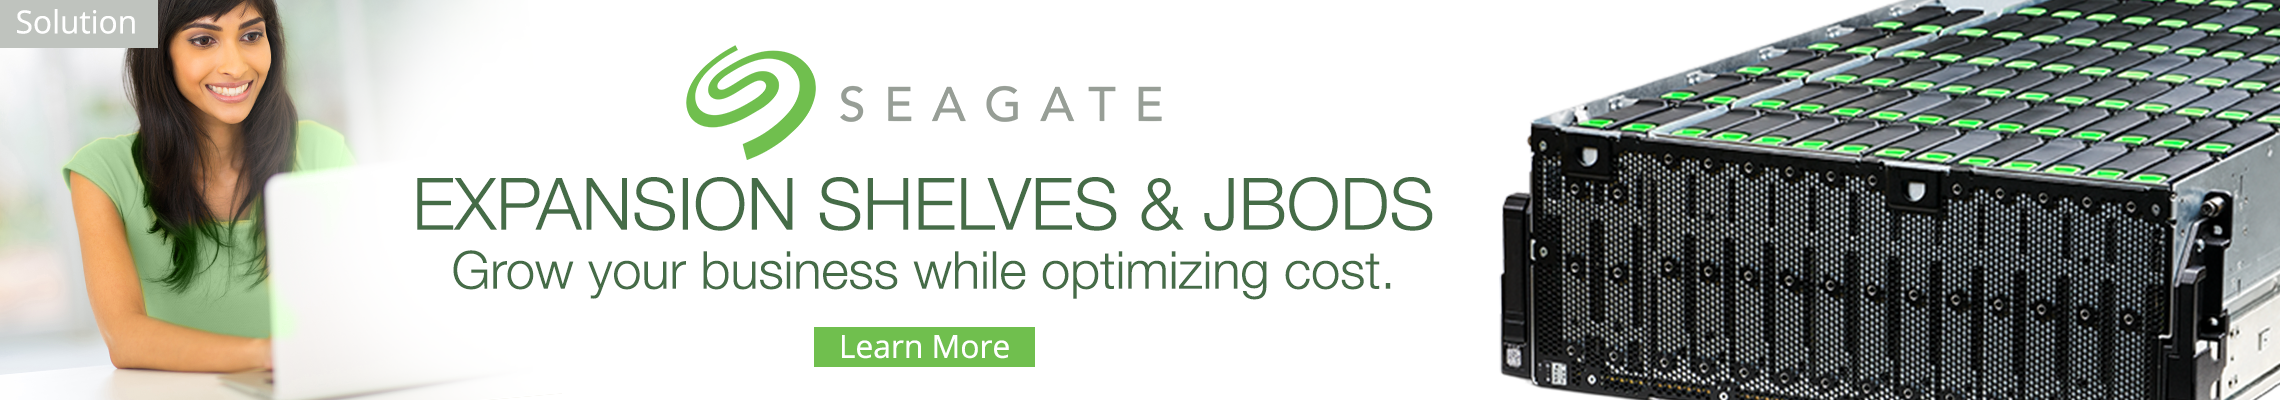 Seagate JBOD